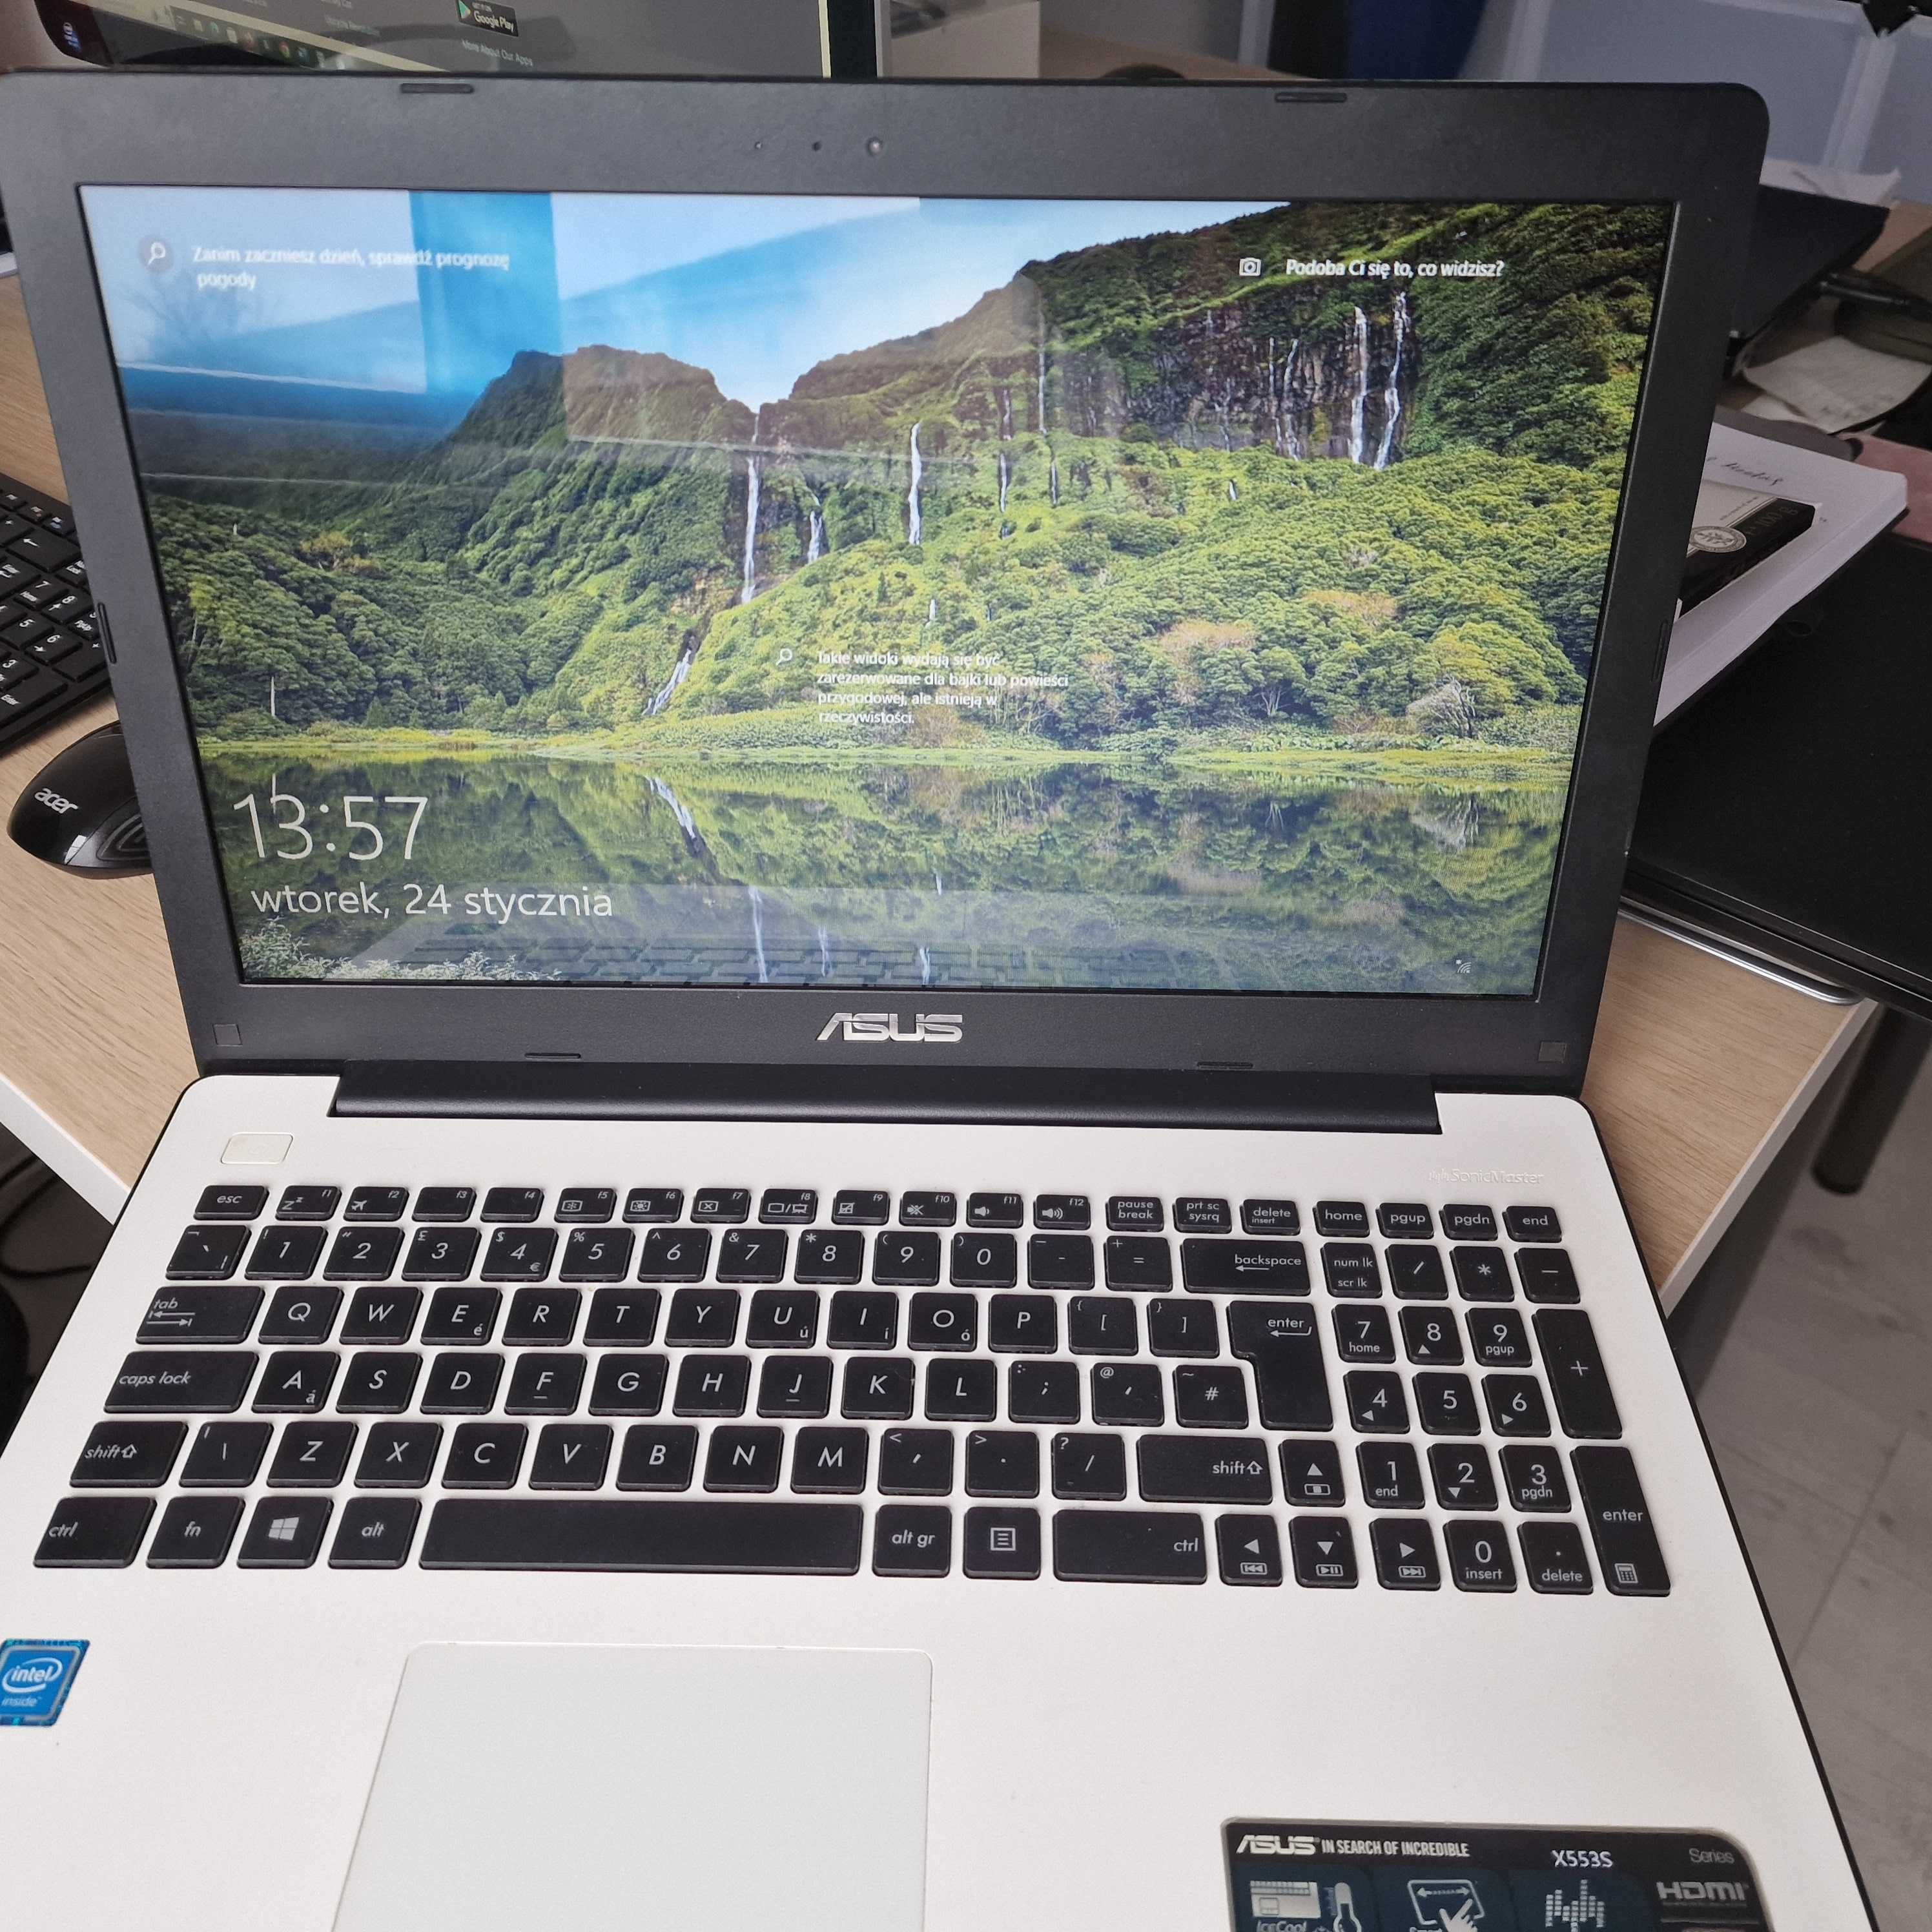 Laptop ASUS X553S 4GB Intel dual core